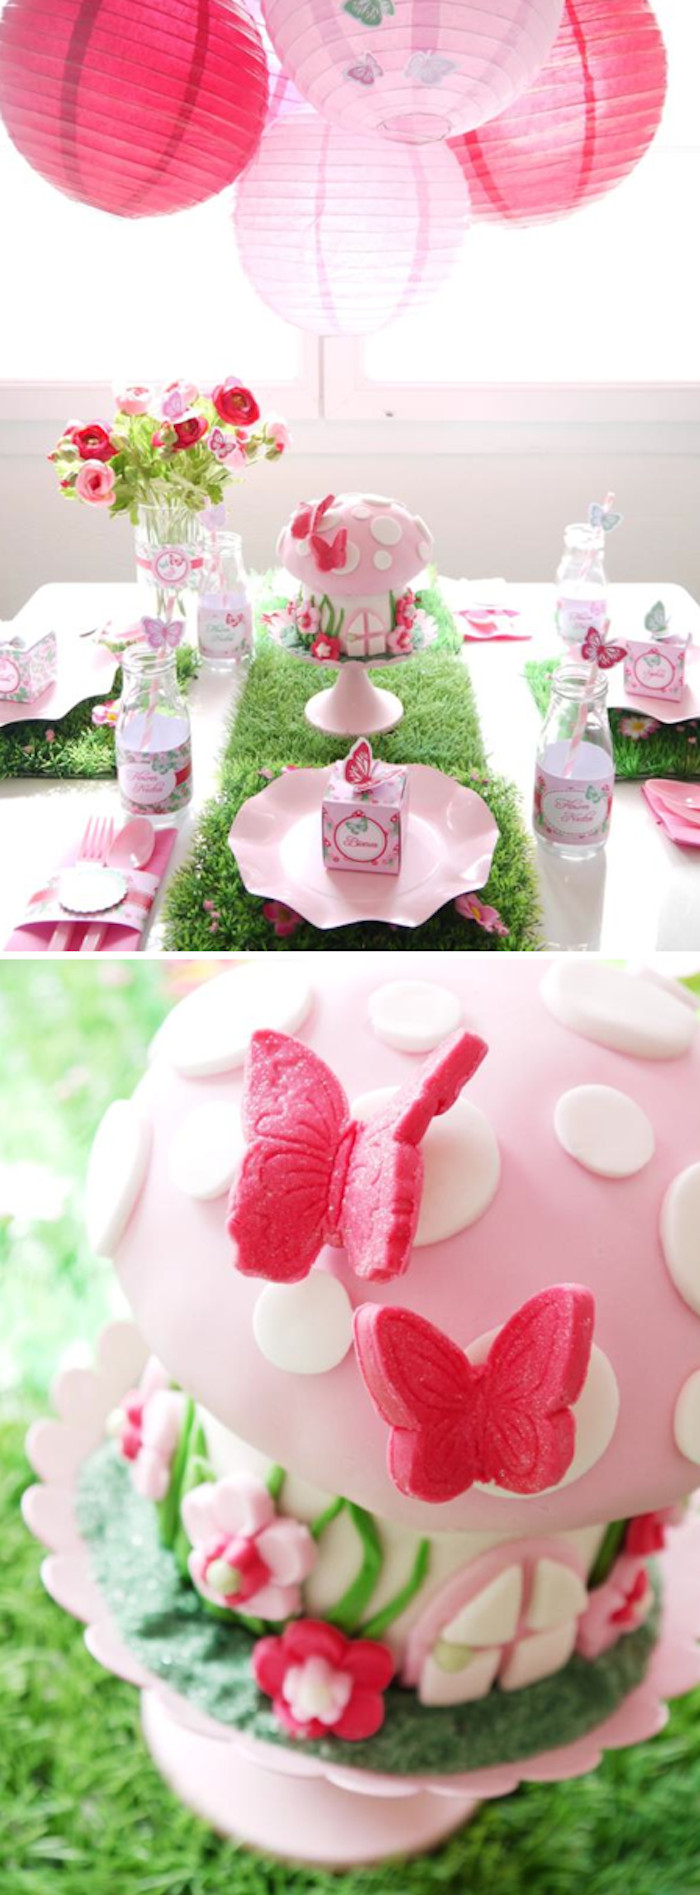 Fairy Birthday Party Decorations
 Kara s Party Ideas Pixie Fairy Pink Girl Birthday Party